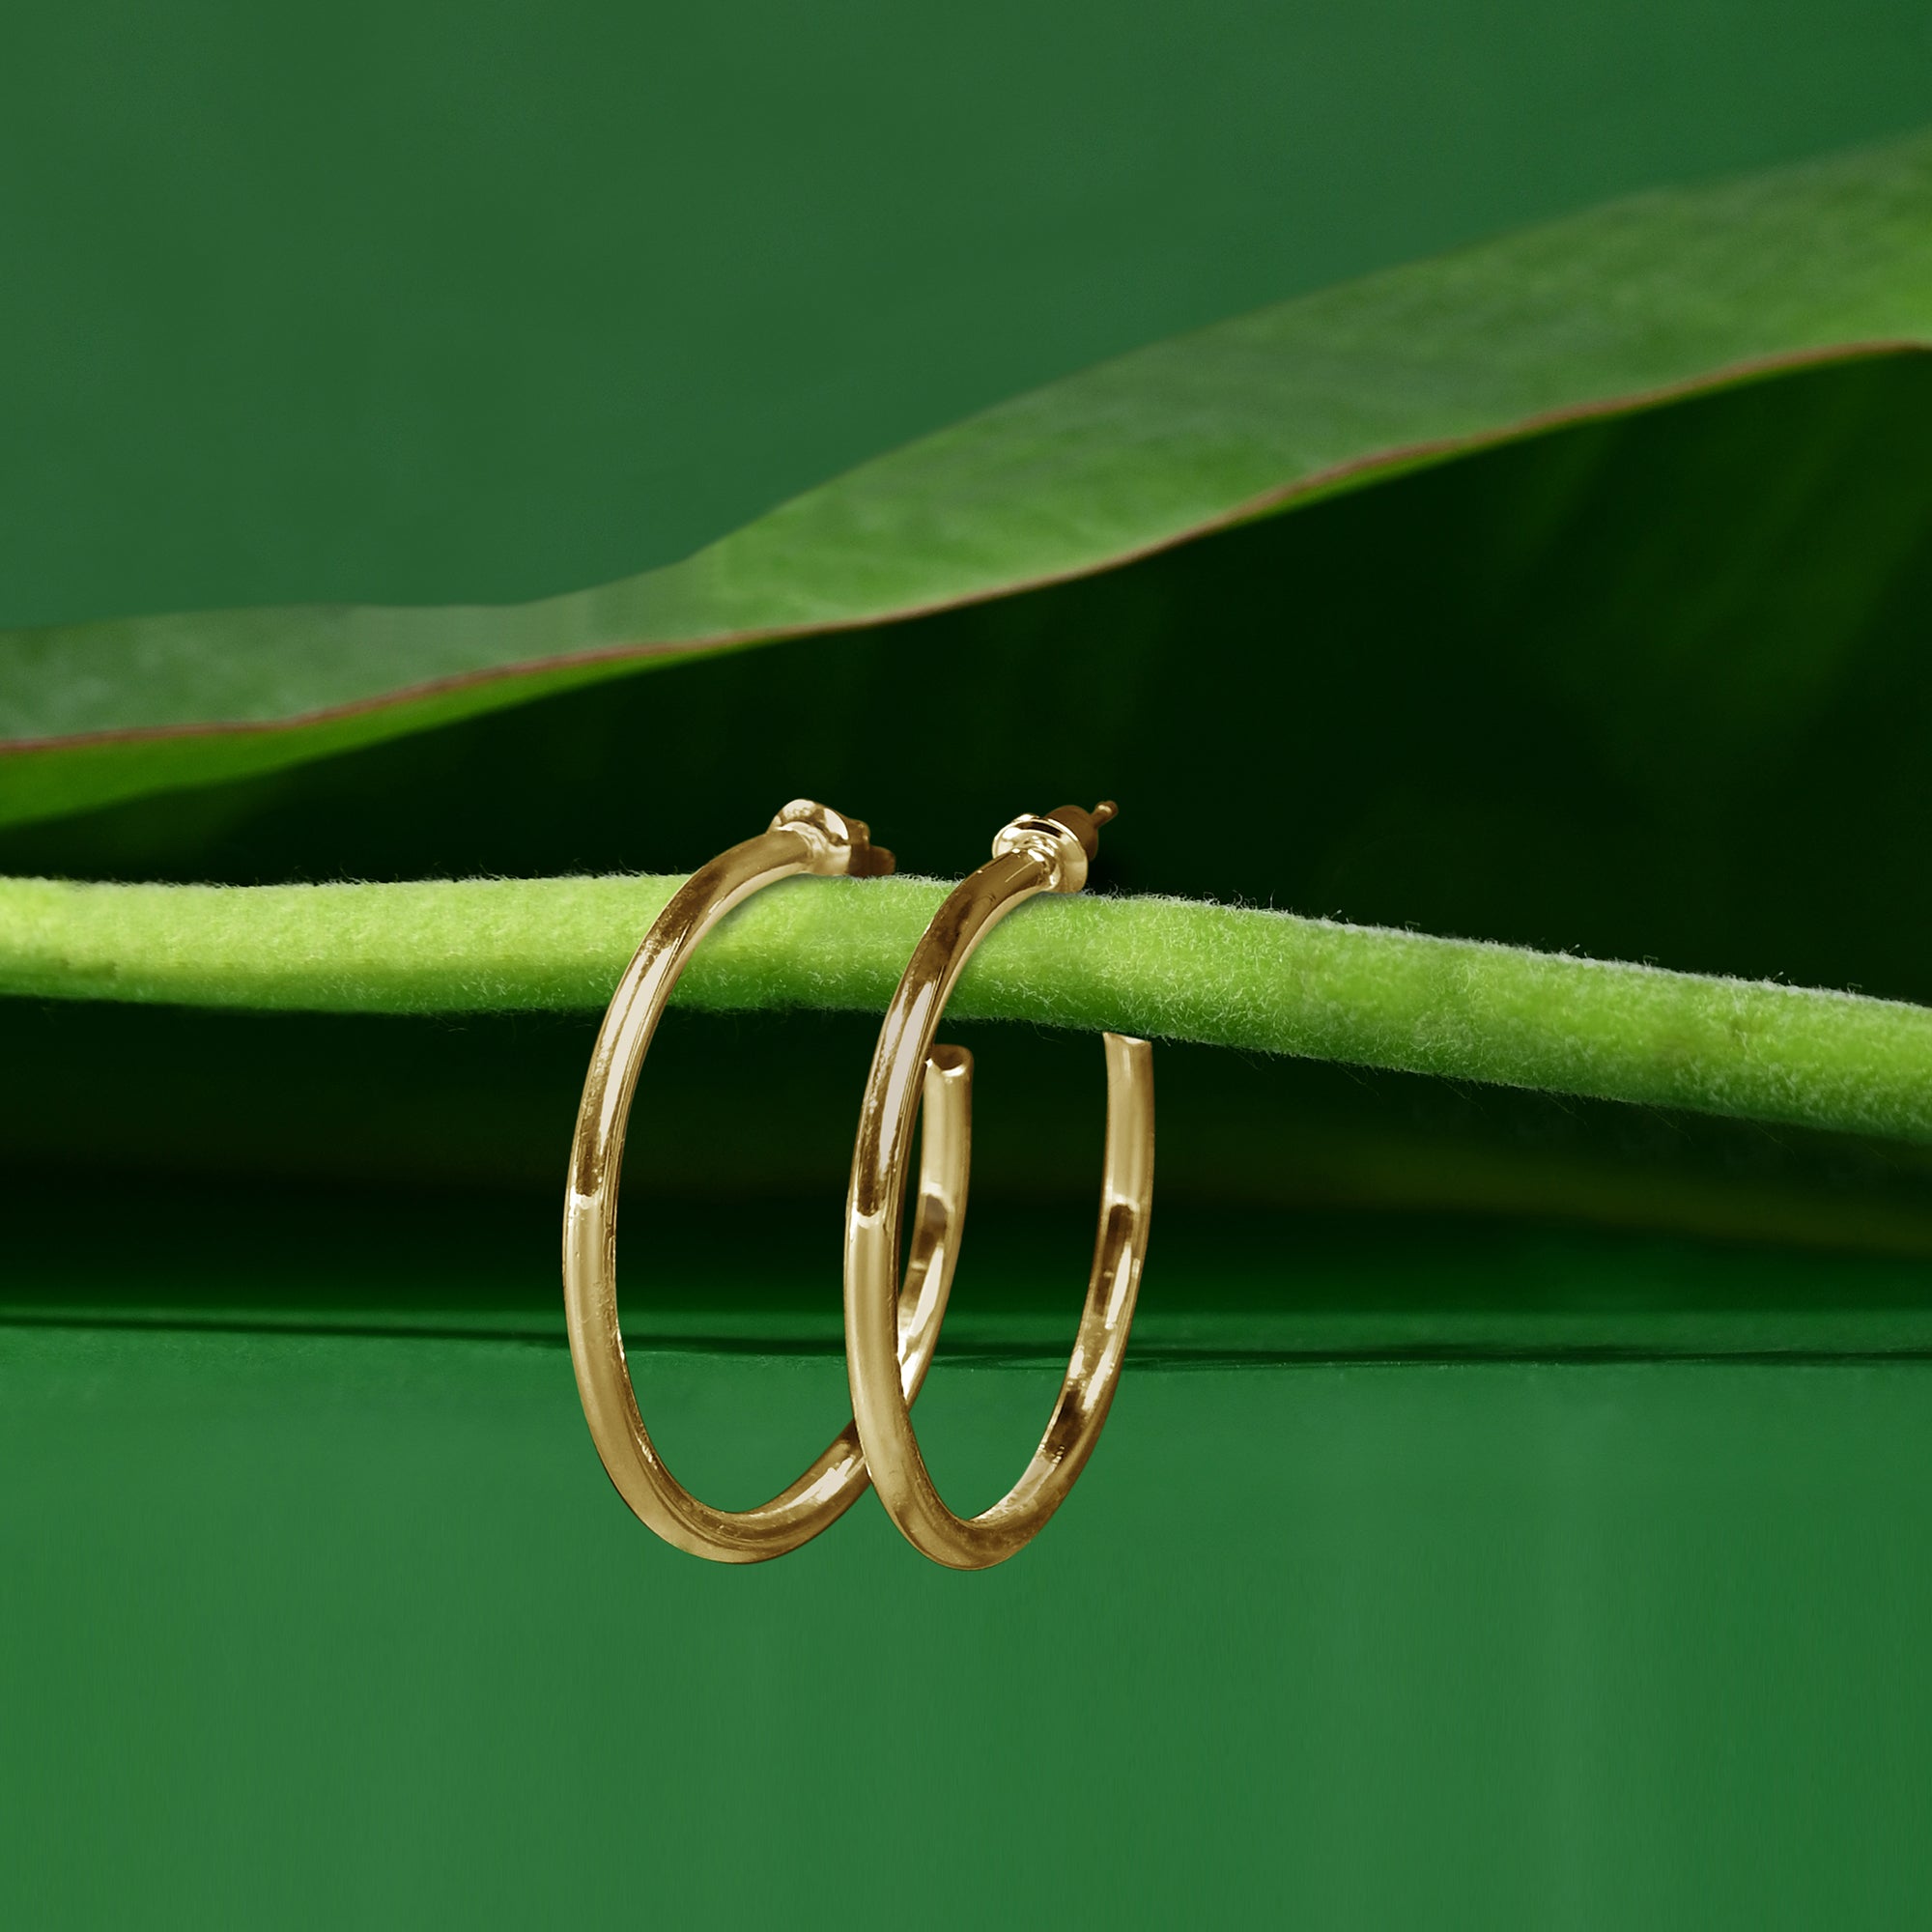 Accessorize London Women's Gold Medium Tube Hoop Earring